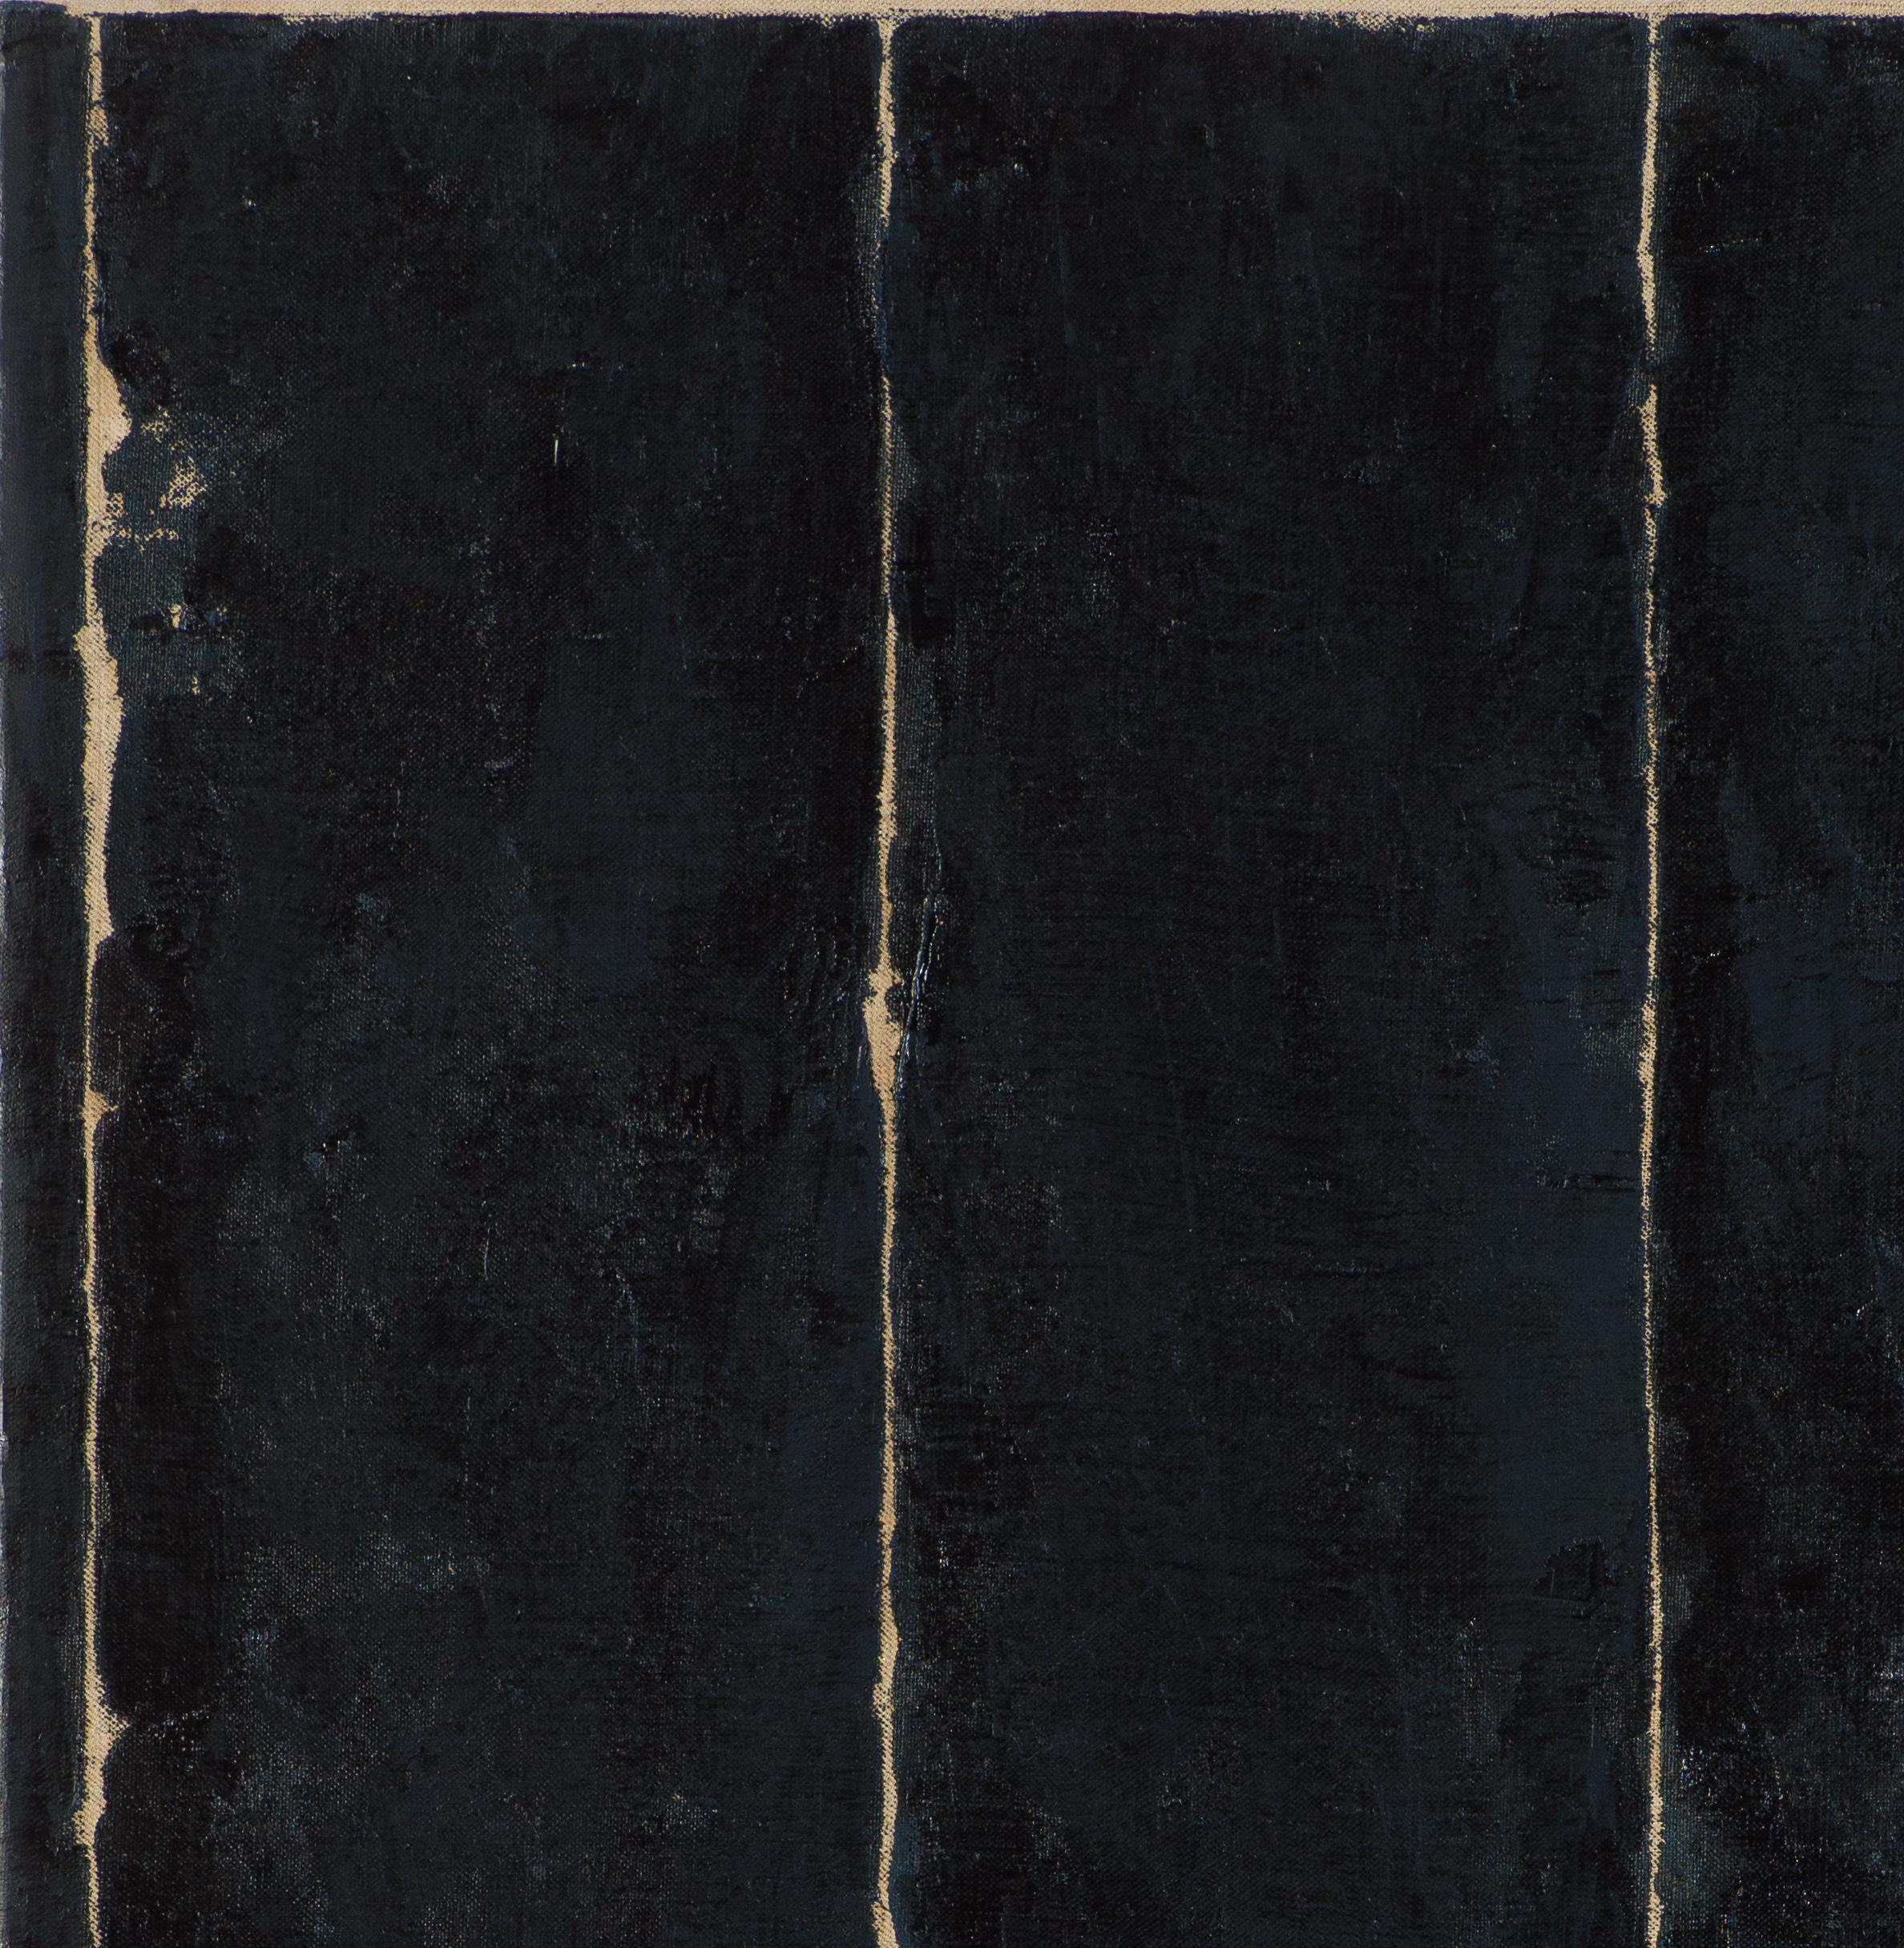 1978 (black) - Painting by Mala Breuer